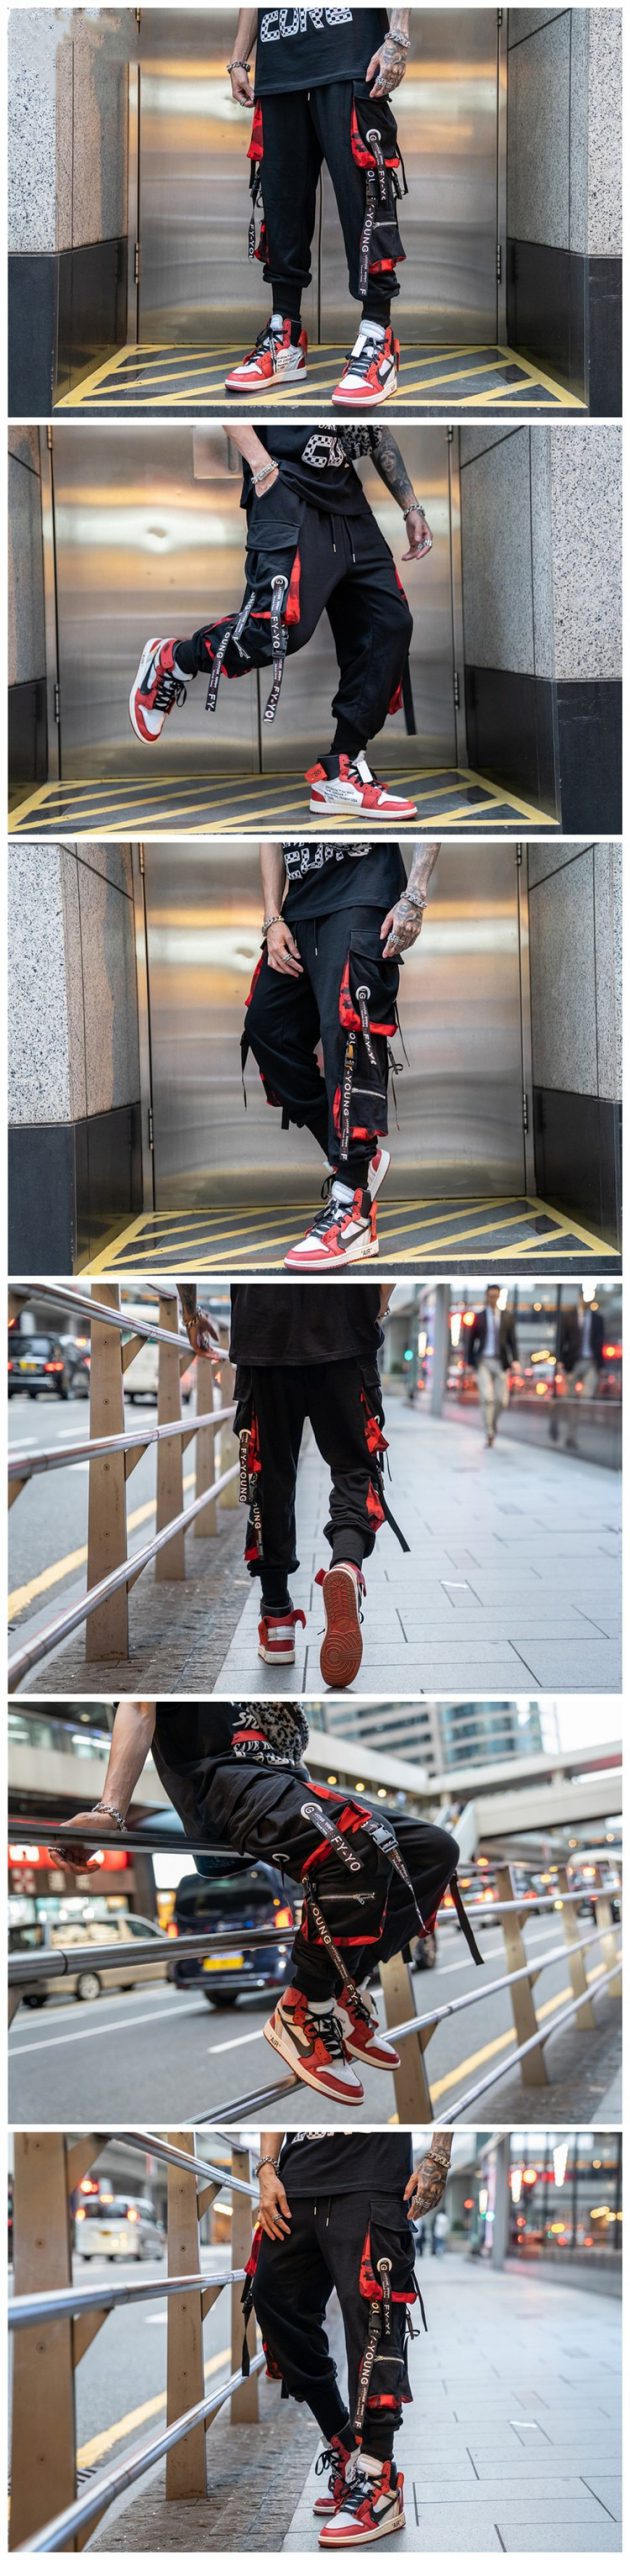 2020 Joggers Cargo Pants for Men Casual Hip Hop Hit Color Pocket Male Trousers Sweatpants Streetwear Ribbons Techwear Pants